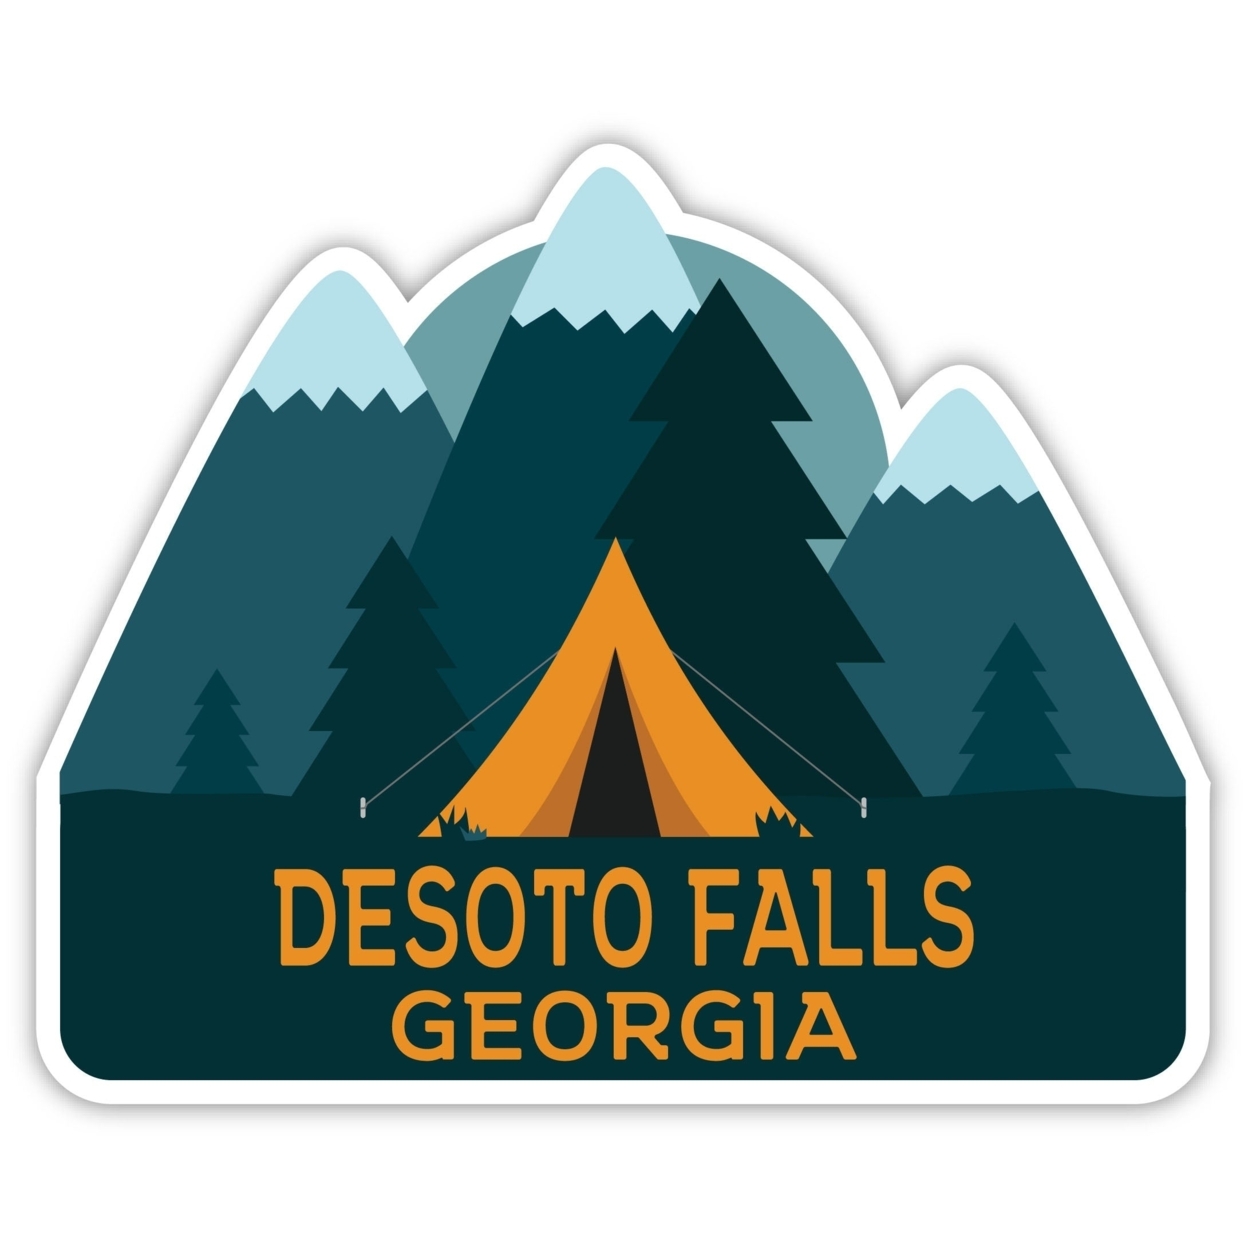 DeSoto Falls Georgia Souvenir Decorative Stickers (Choose Theme And Size) - Single Unit, 10-Inch, Tent